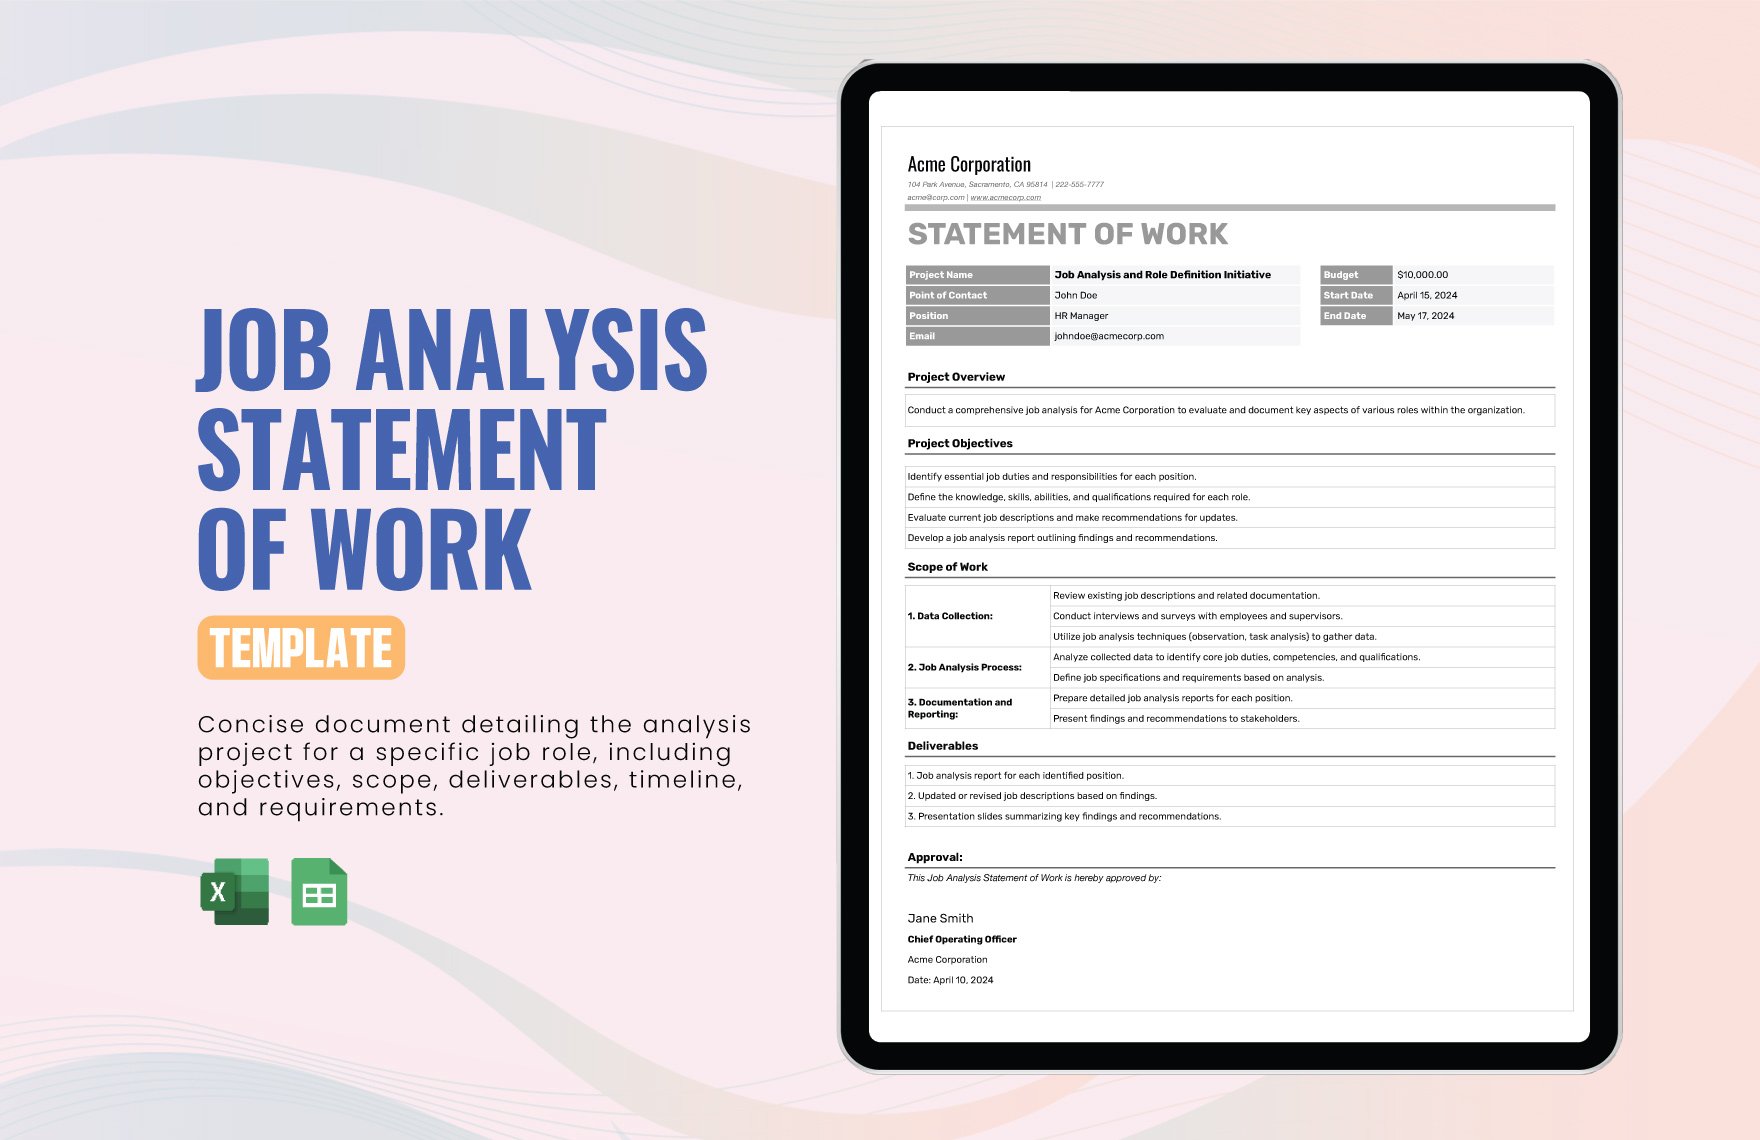 Job Analysis Statement of Work Template